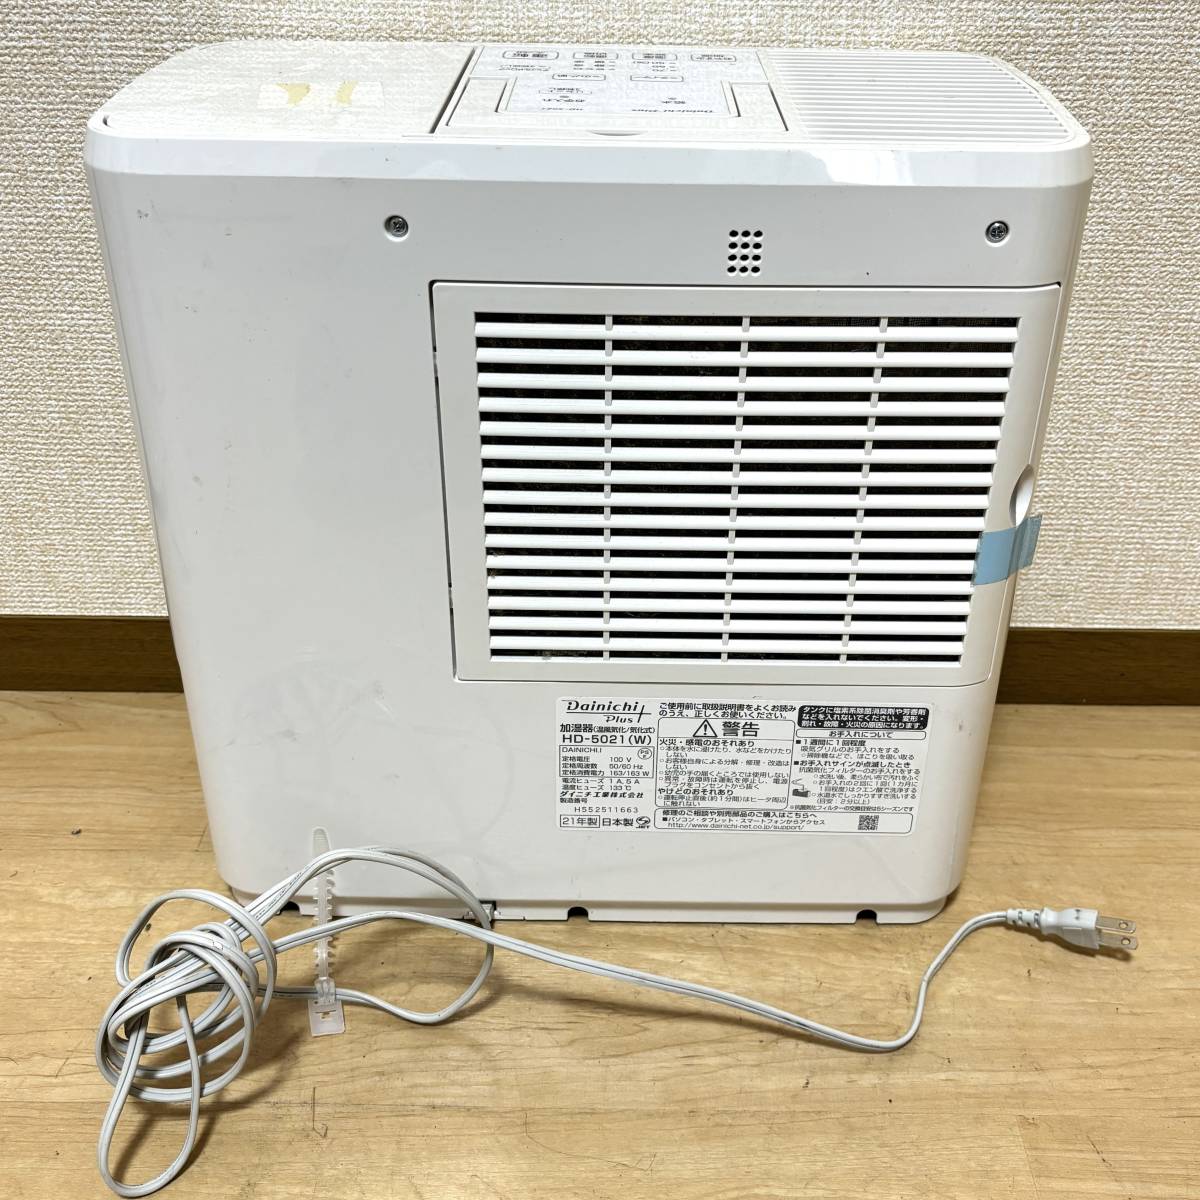 ★動作確認済★ Dainichi 加湿器 温風気化 気化式 HD-5021(W) 2021年製 ダイニチ_画像3